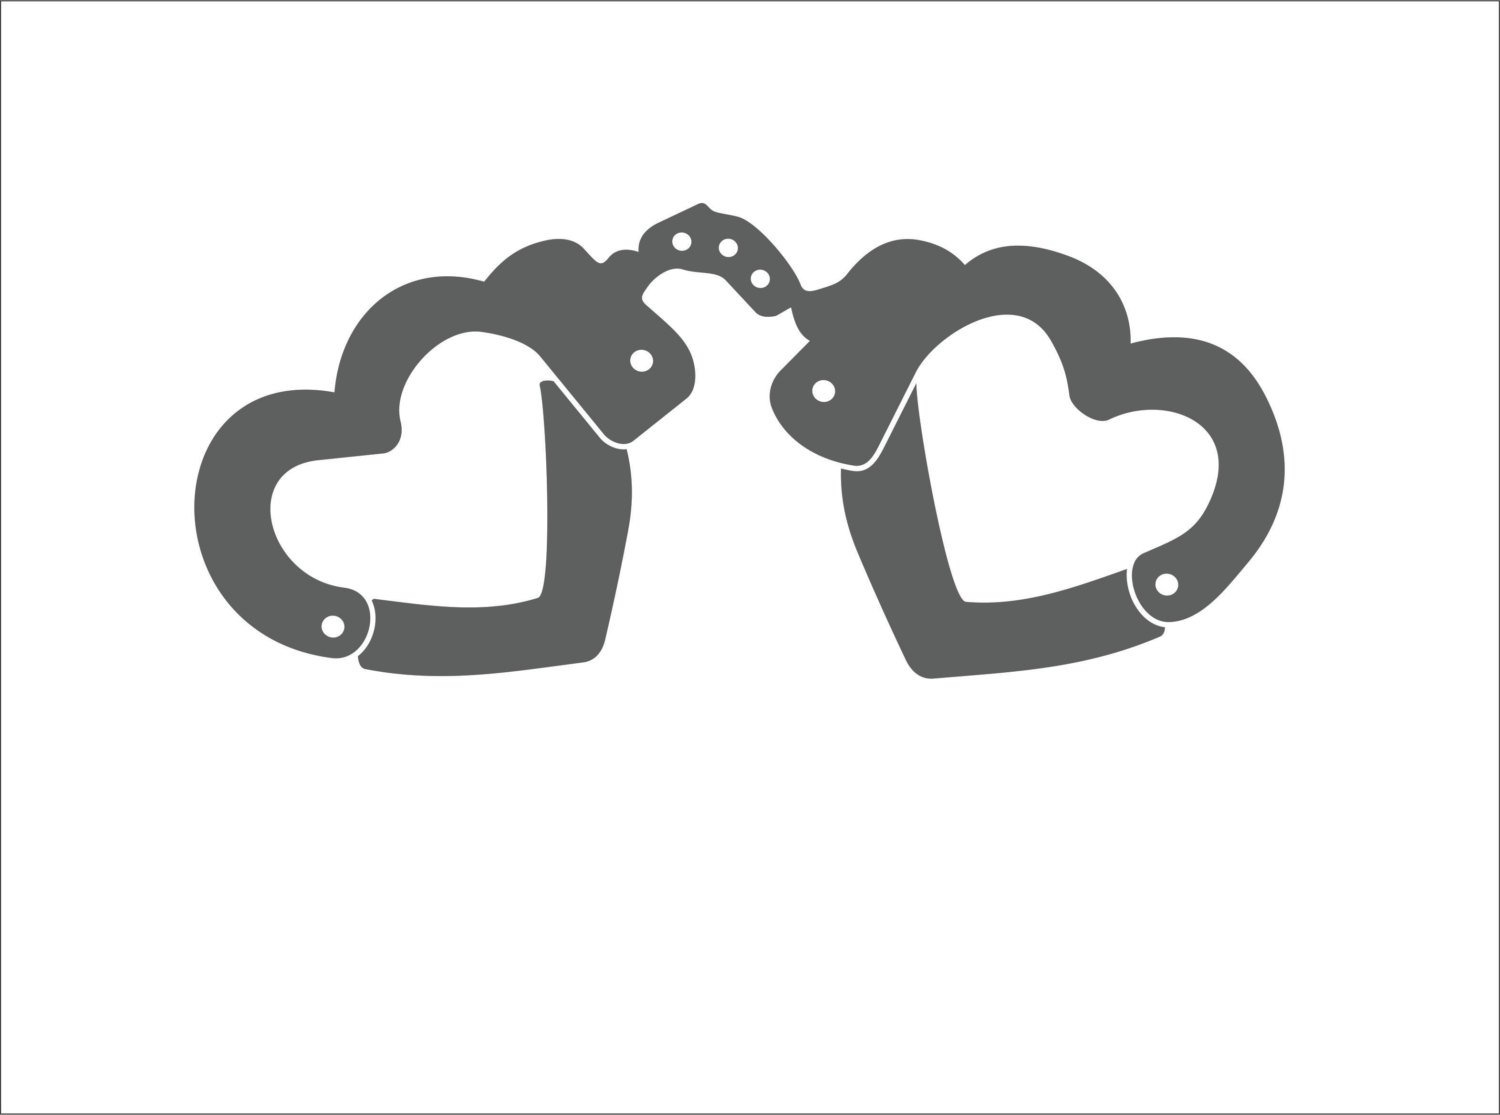 Free cuffs cliparts download. Handcuff clipart heart